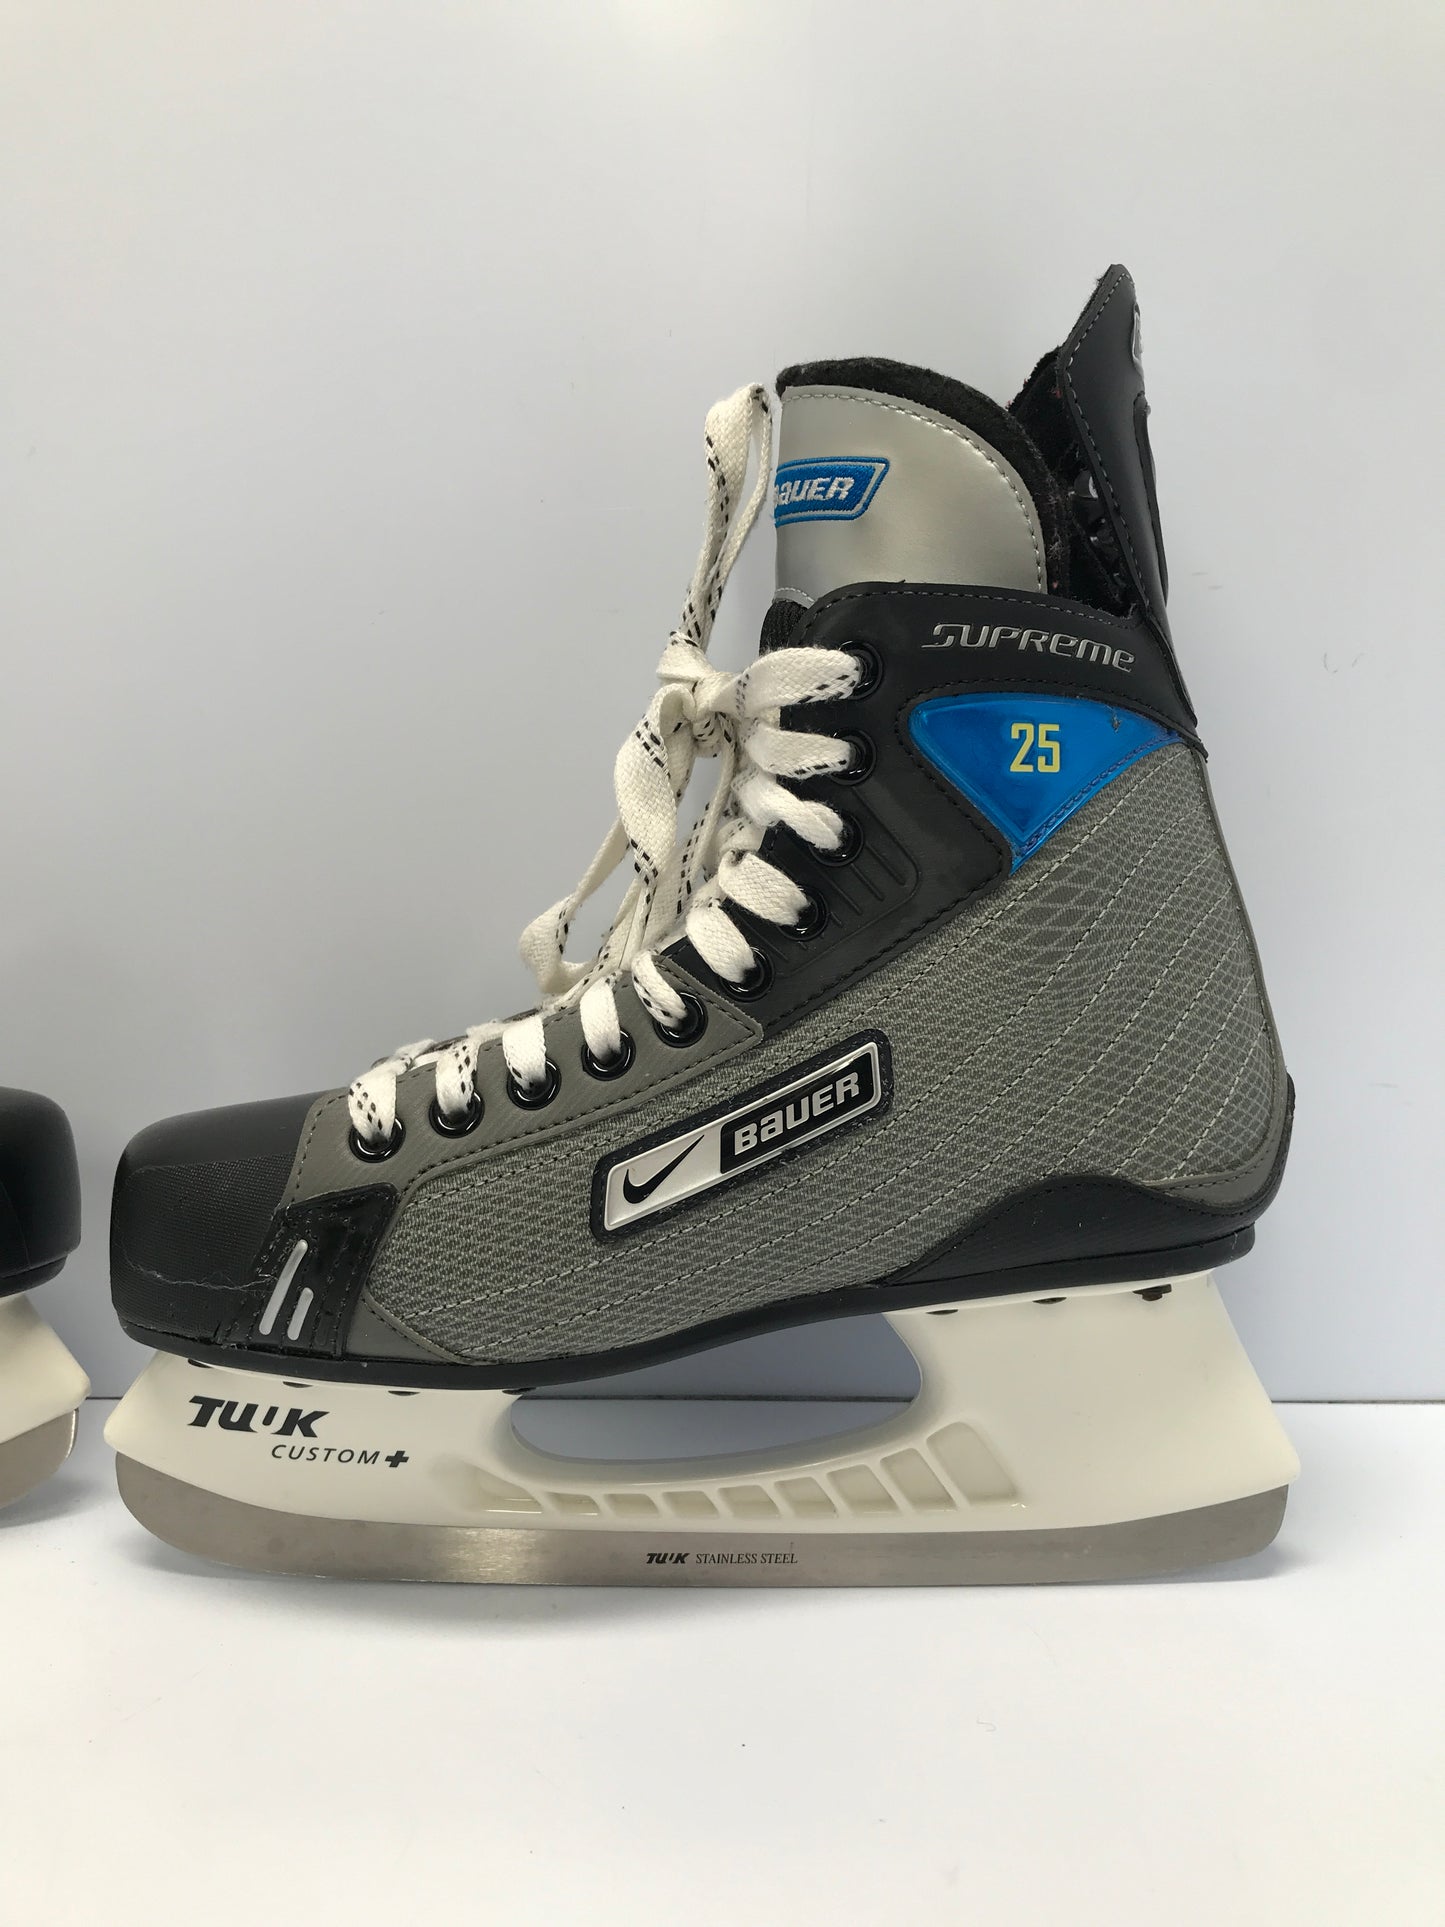 Hockey Skates Men's Senior Size 8 Shoe Size 6.5 Bauer Supreme Like New